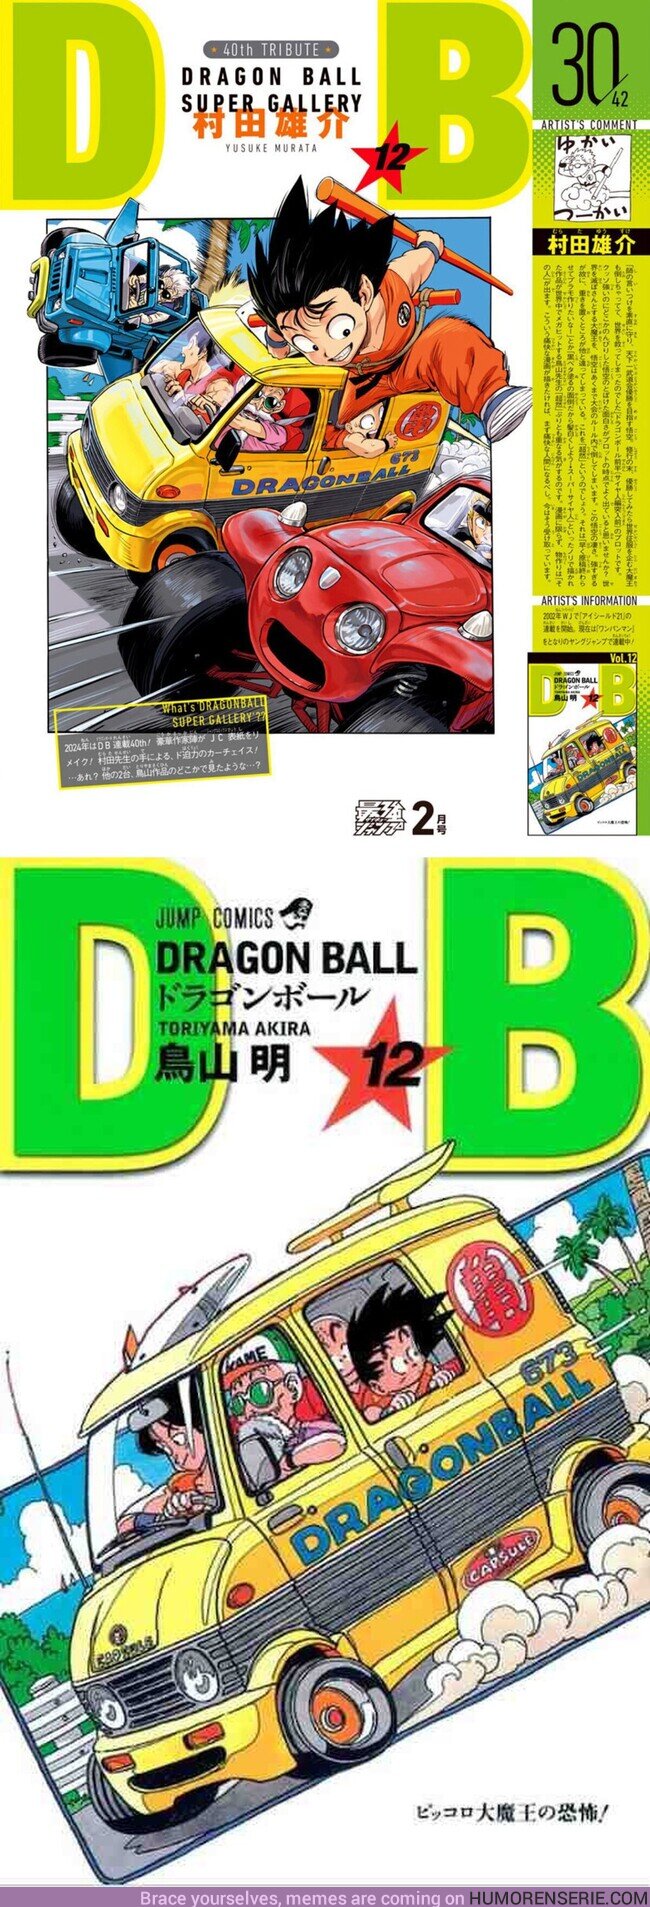 149755 - Nueva portada redibujada de ‘Dragon Ball’ este mes por Yûsuke Murata El excelente dibujante de ‘One Punch Man’ o ‘Eyeshield 21’